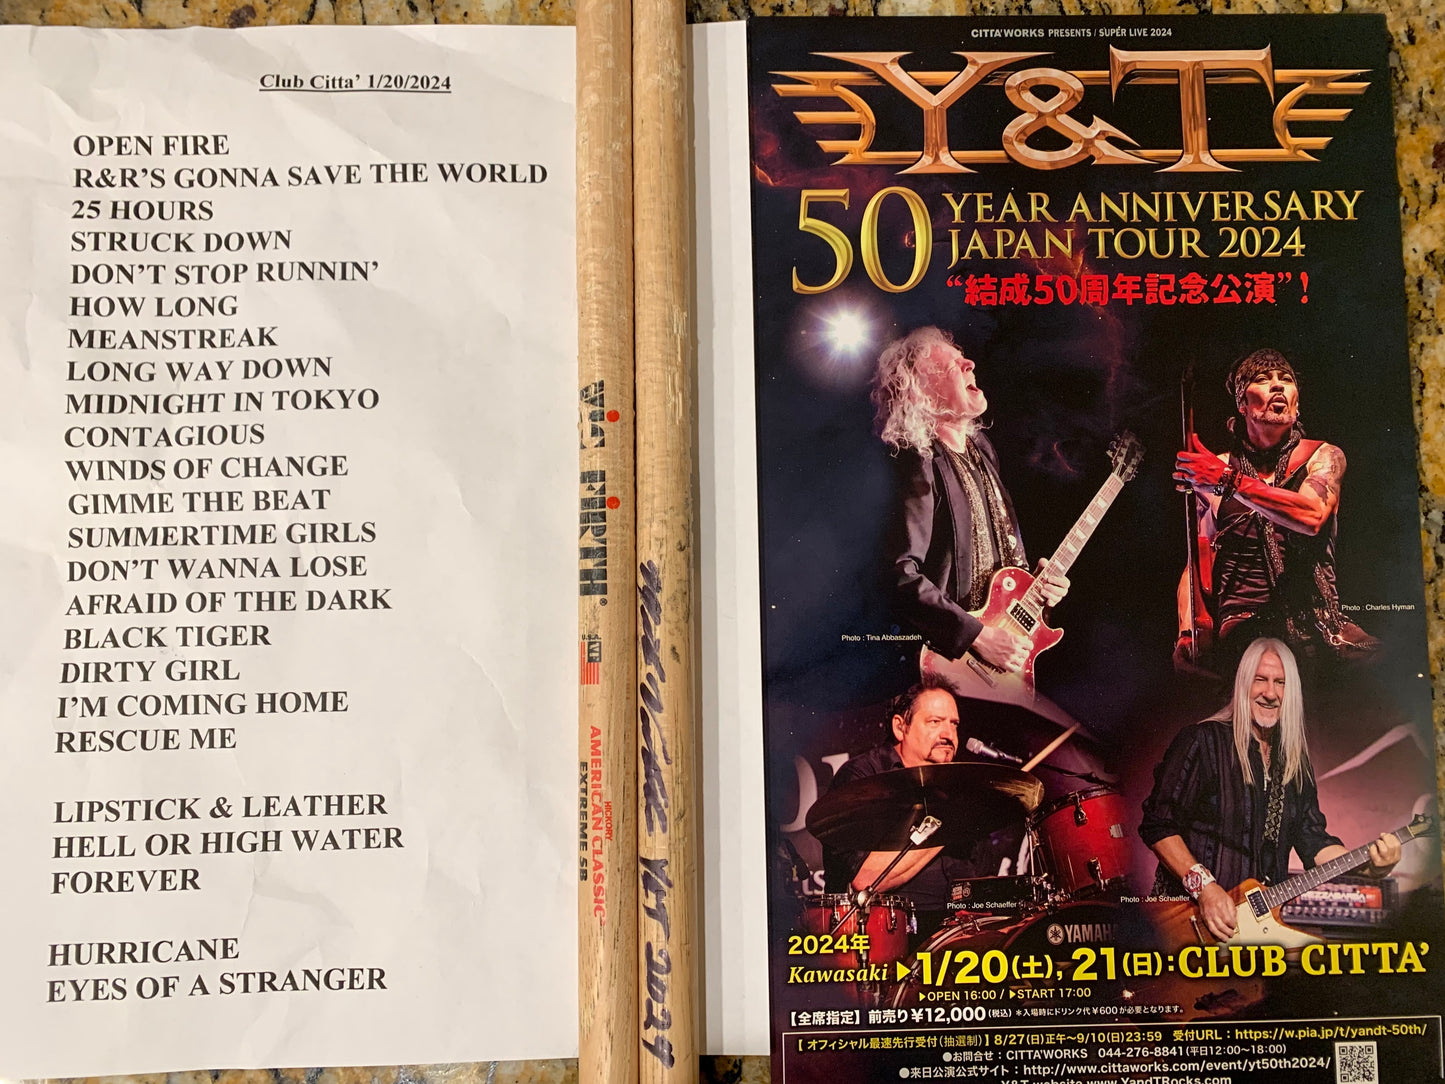 Autographed Sticks, Set List and Poster from Y&T's Night 1 at Club Citta' in Kawasaki, Kanagawa, Japan